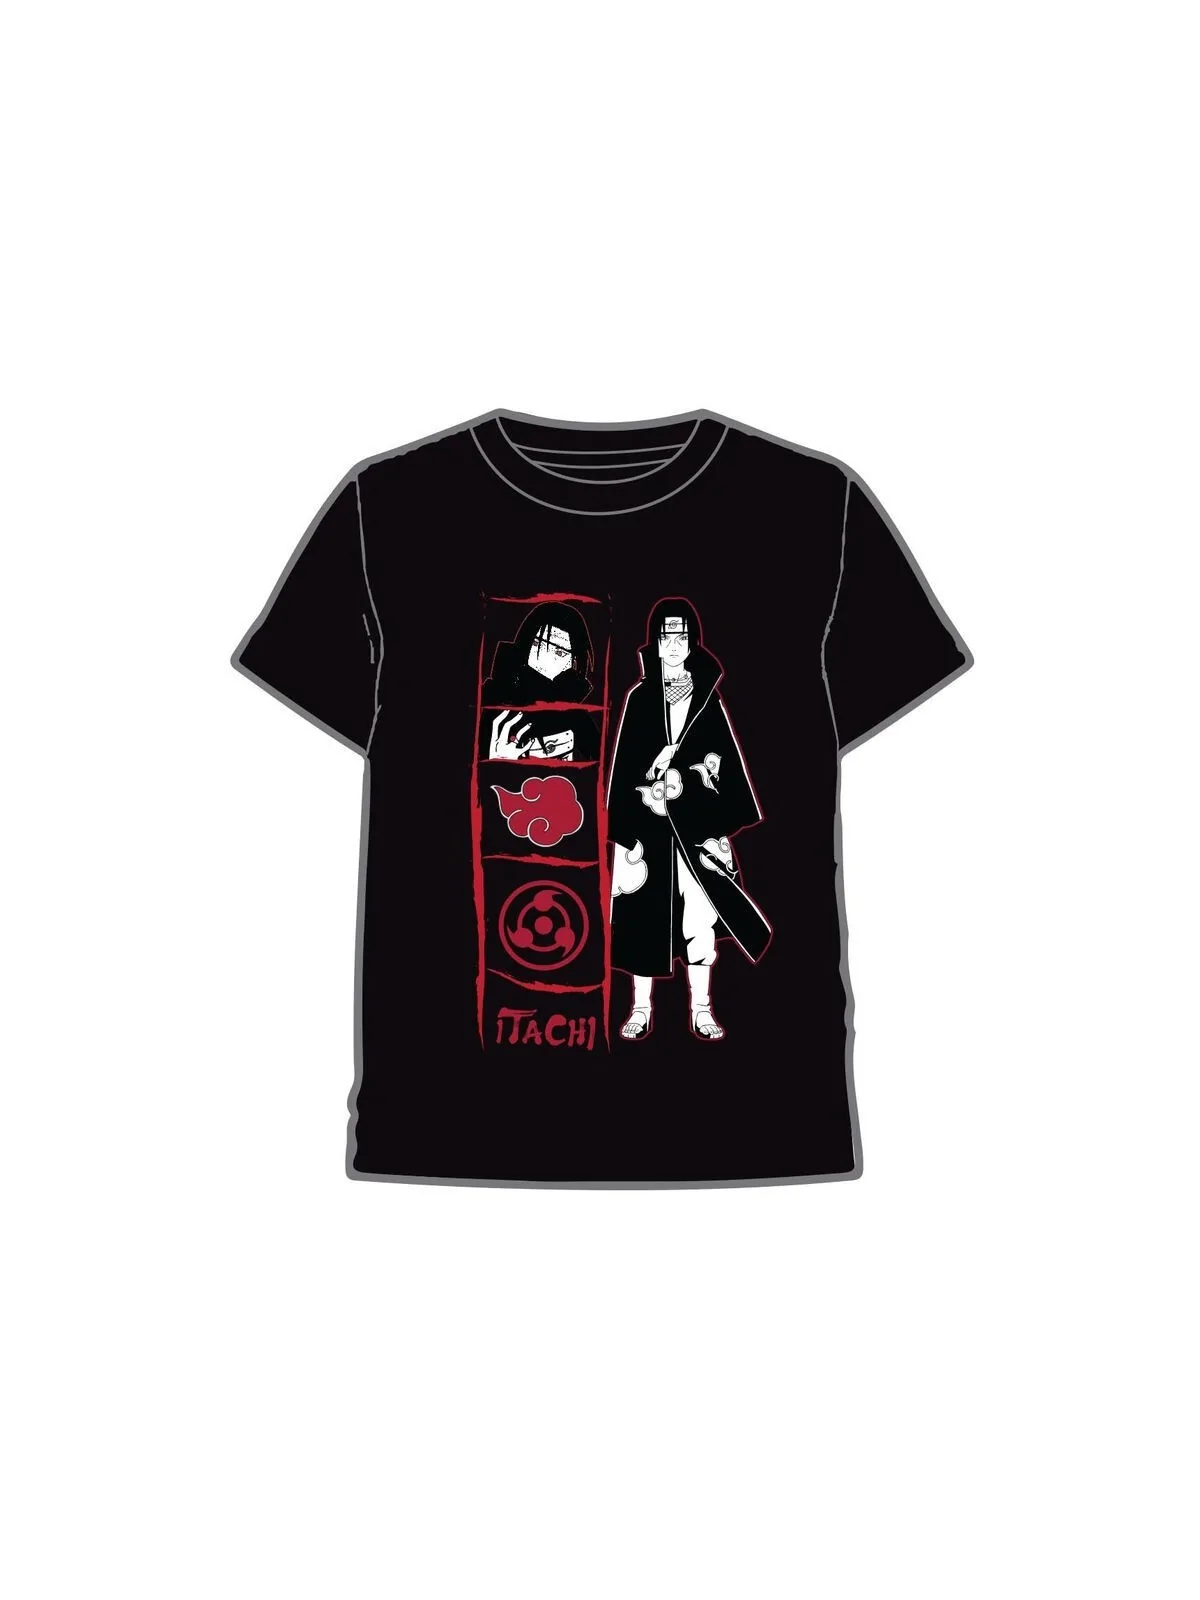 Comprar Camiseta Itachi Naruto Shippuden Infantil (Talla 10) barato al